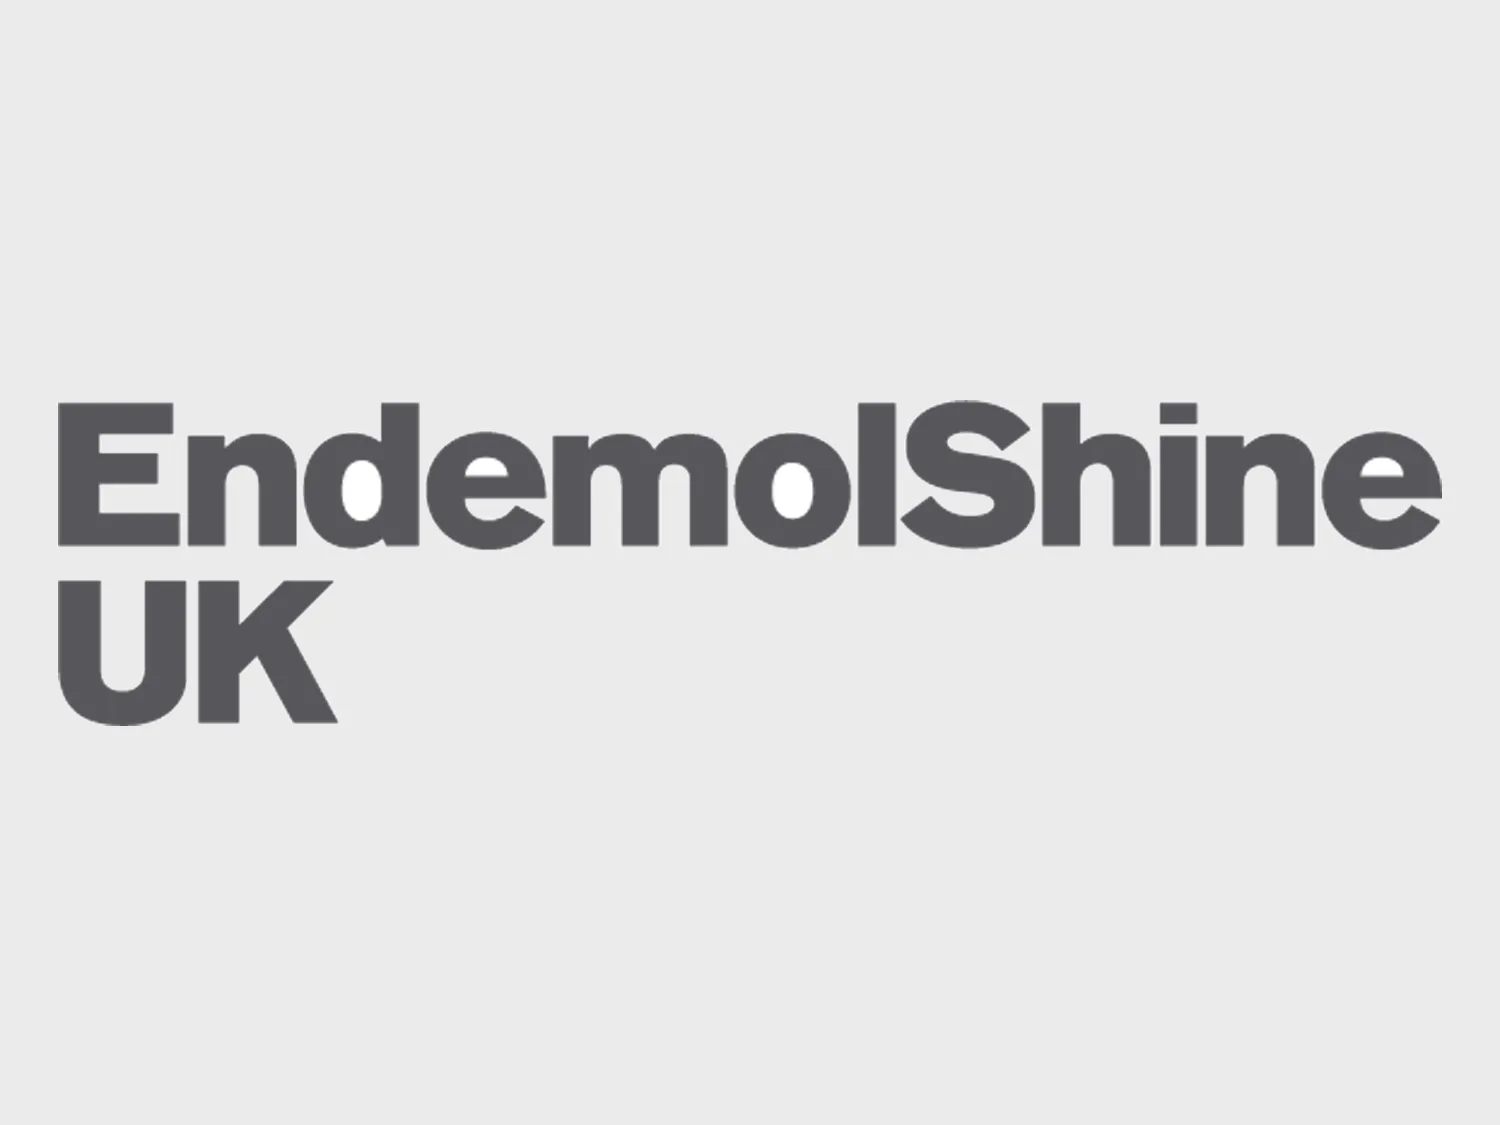 Endemol-Shine